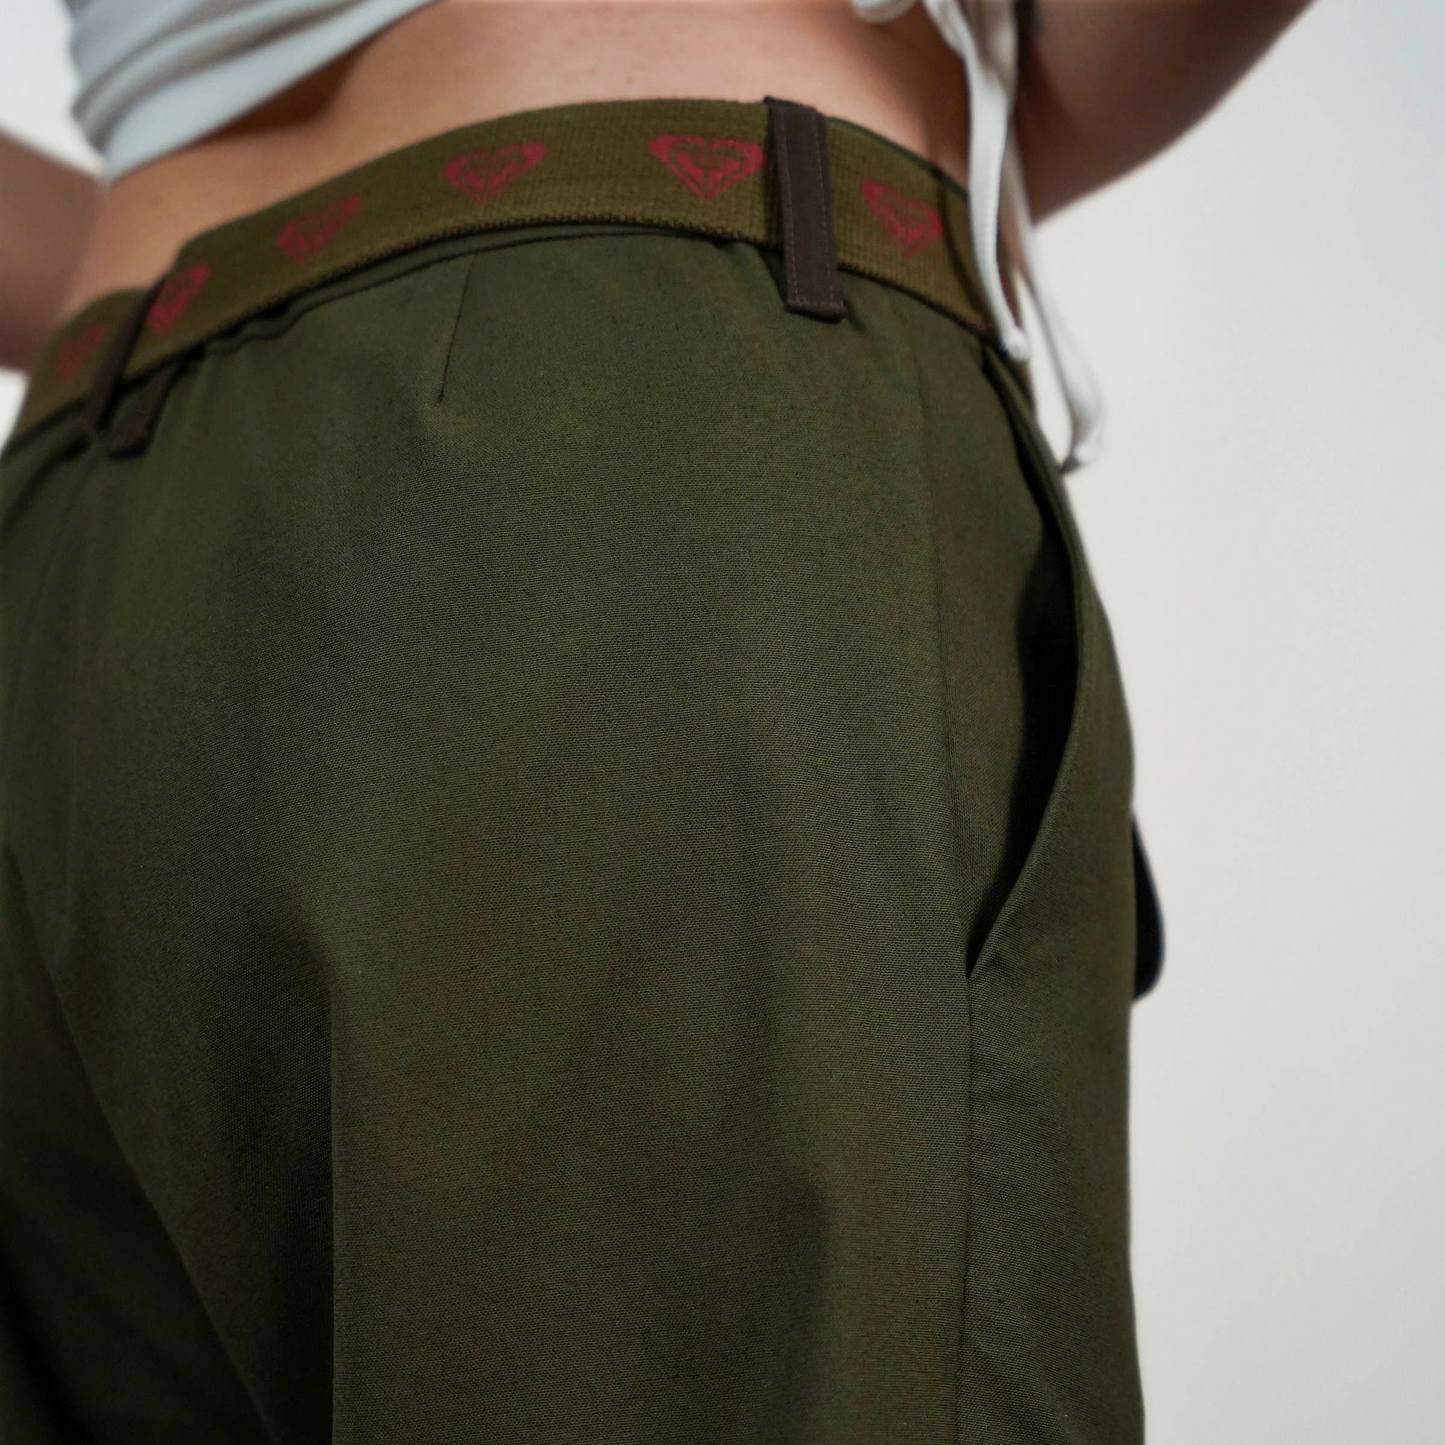 Men's Dress Pants Cosplay Fashion Costume Sewing Pattern/Downloadable PDF File